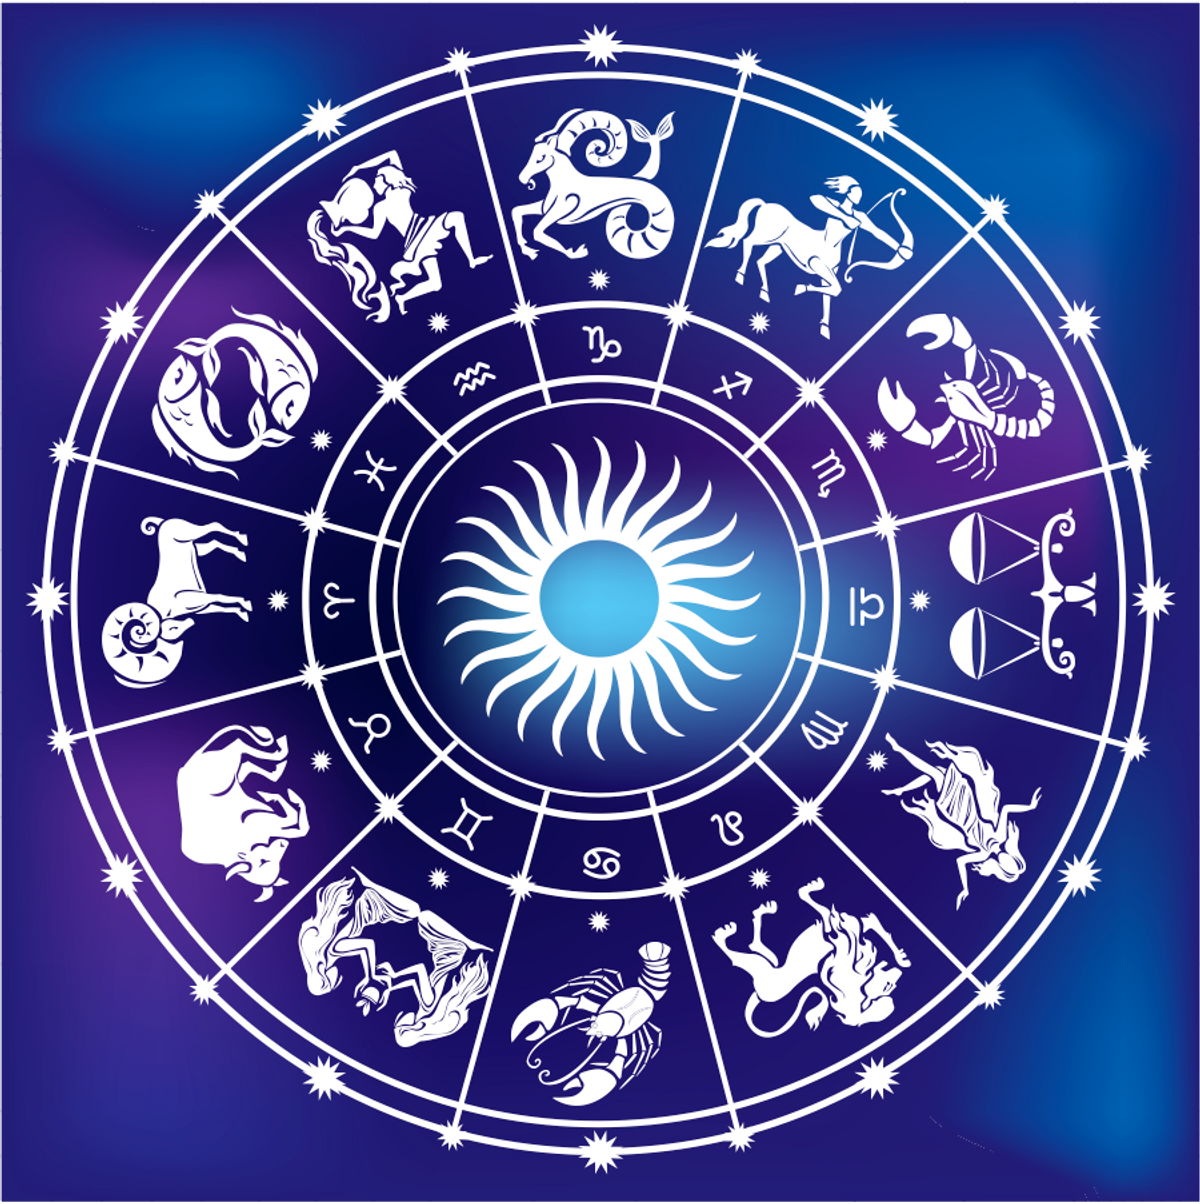 Horoscopes: Real or Fake?